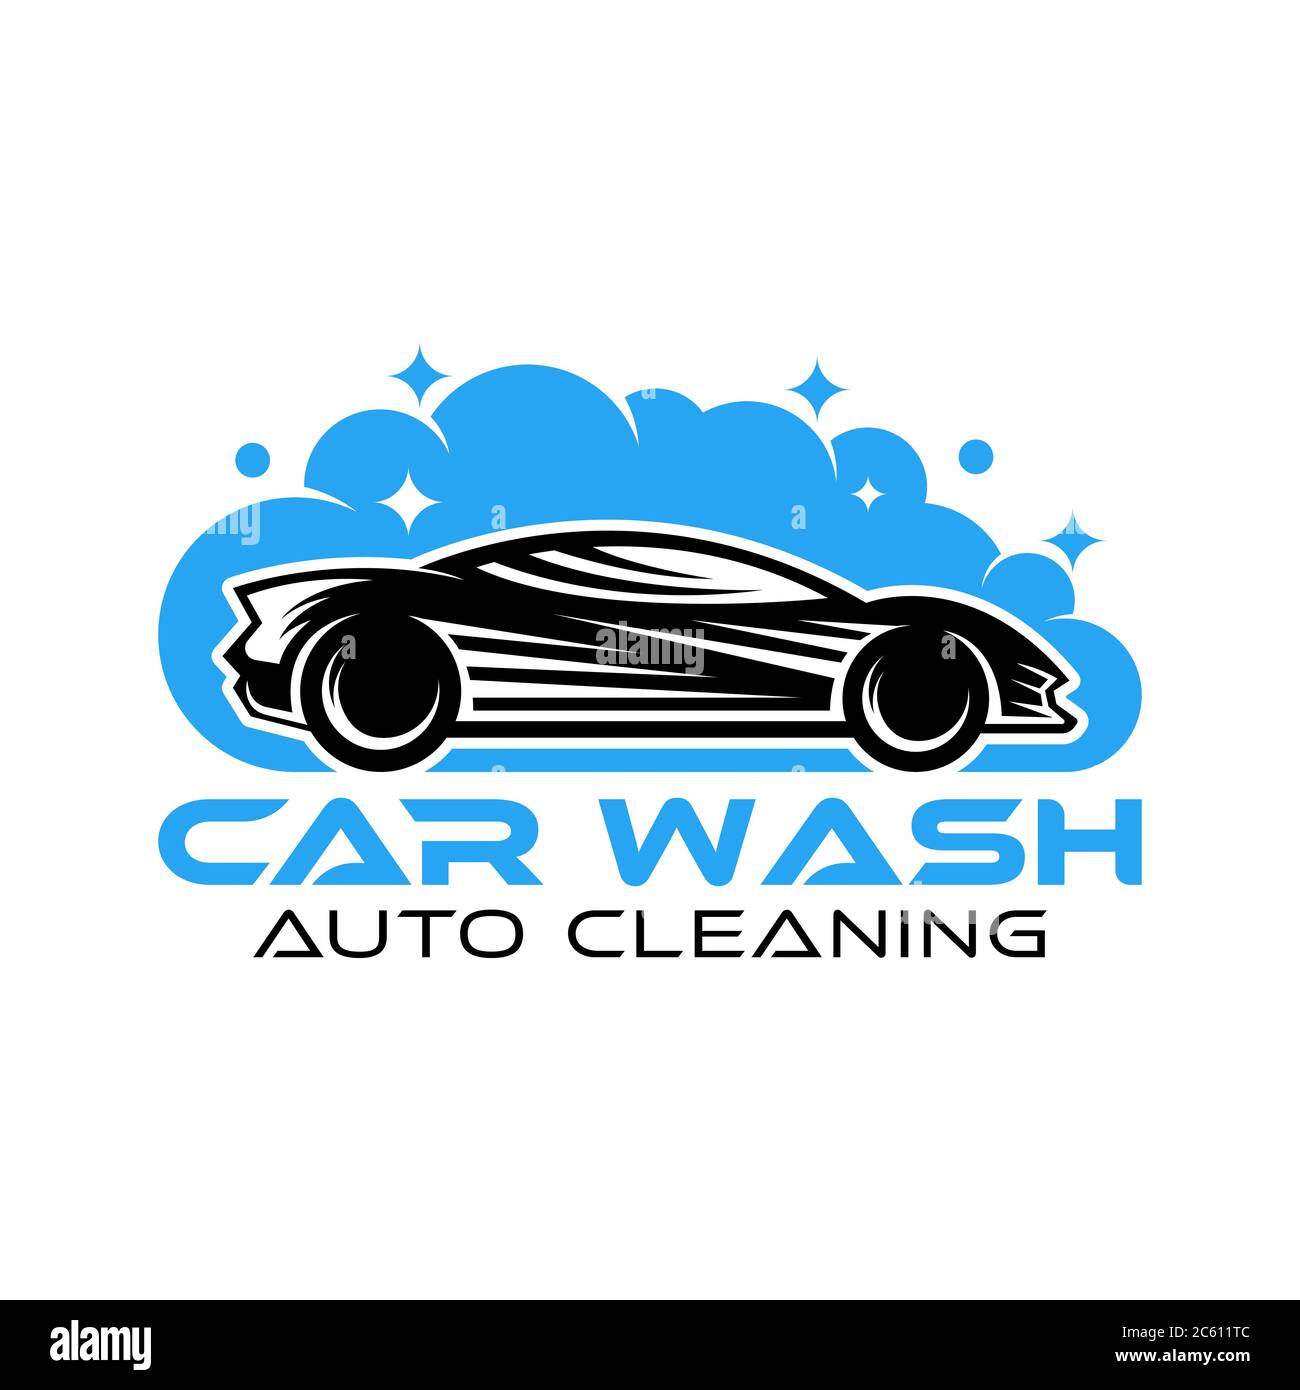 Car Wash Logo Vector Illustration template. Trendy Car Wash vector logo icon silhouette design. Car Auto Cleaning logo vector illustration for car det Stock Vector